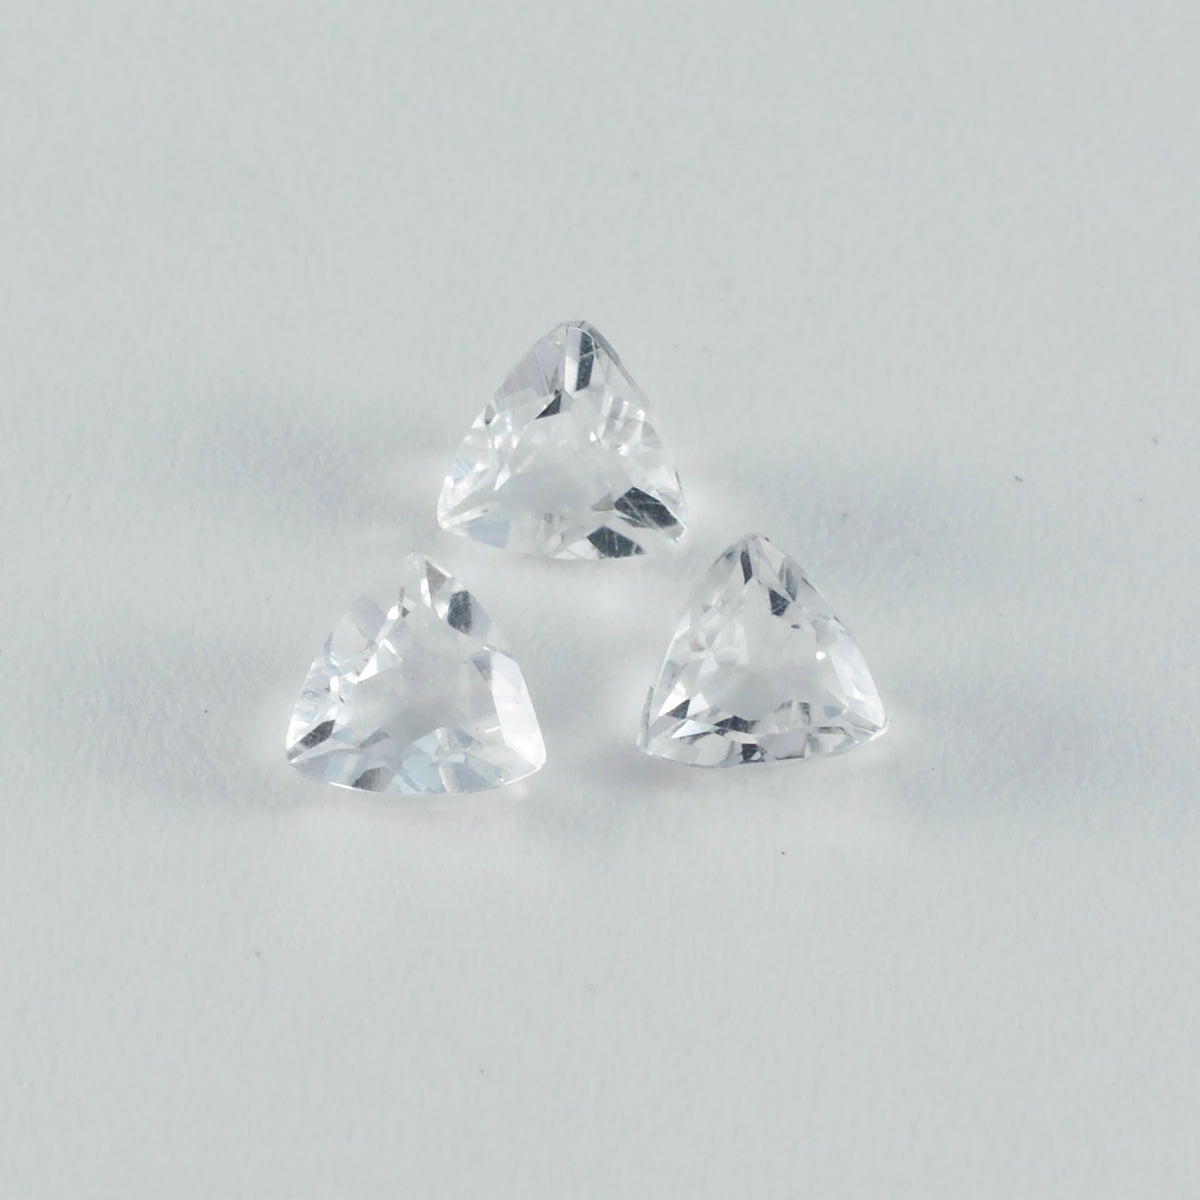 Riyogems 1PC White Crystal Quartz Faceted 10x10 mm Trillion Shape amazing Quality Loose Stone